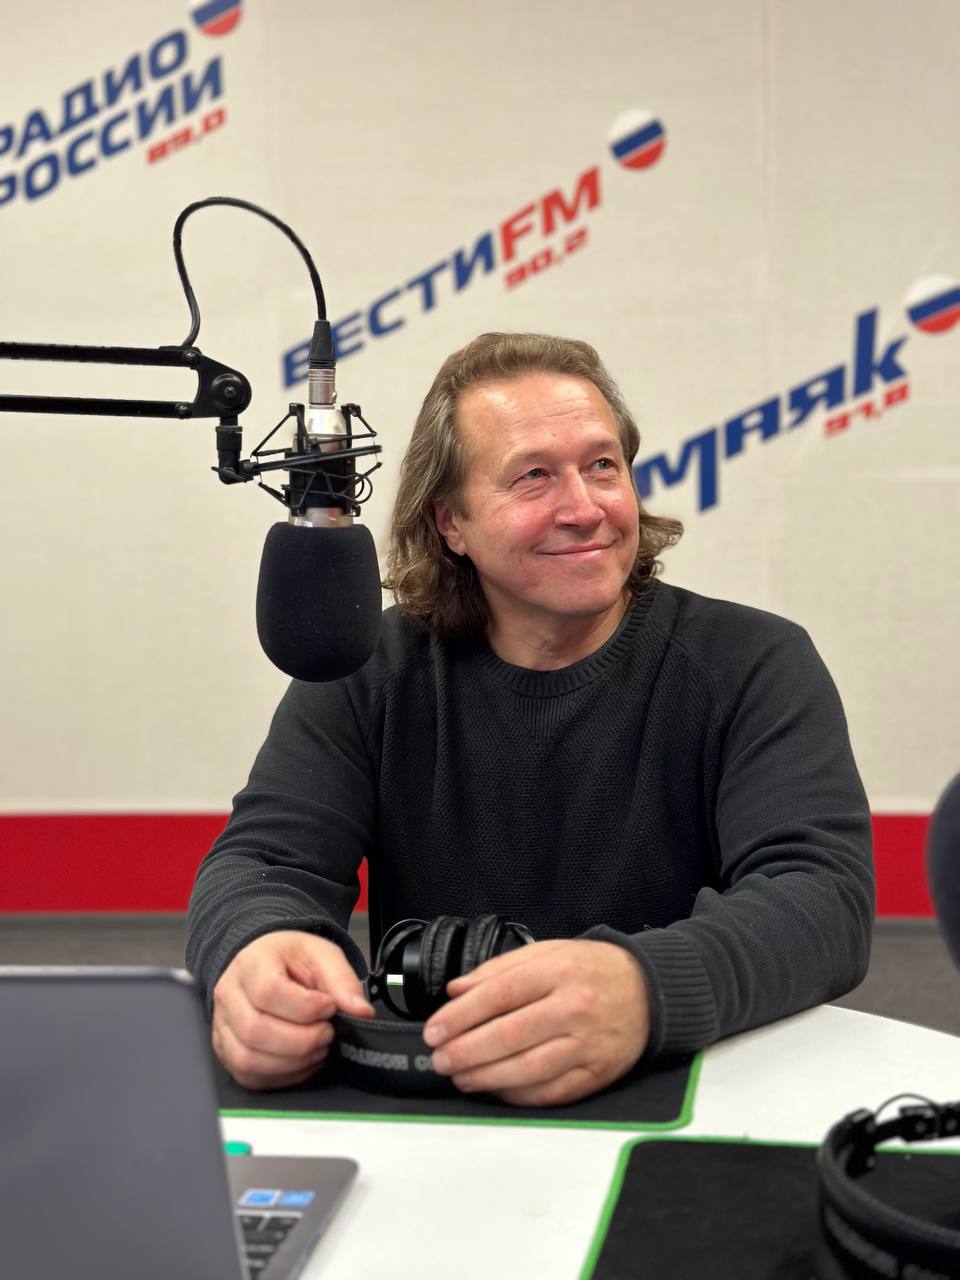 Interview on Radio Russia 89.0 Rostov-on-Don